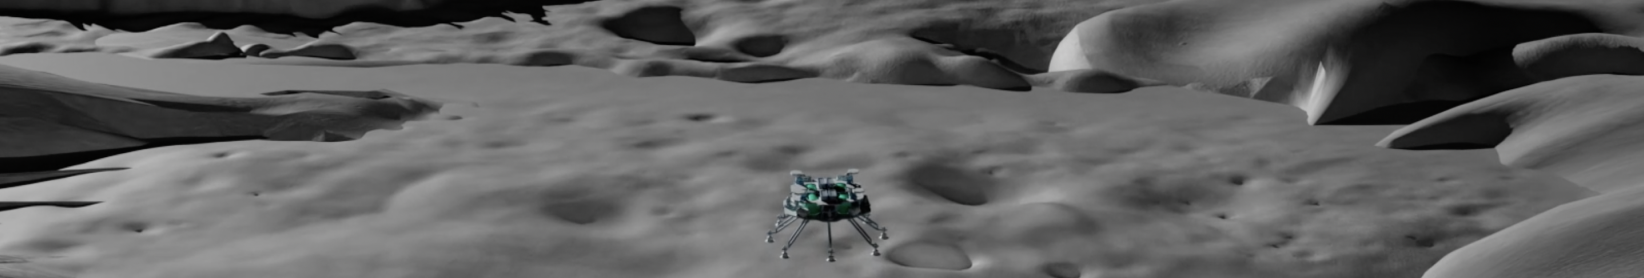 Simulate lunar terrain